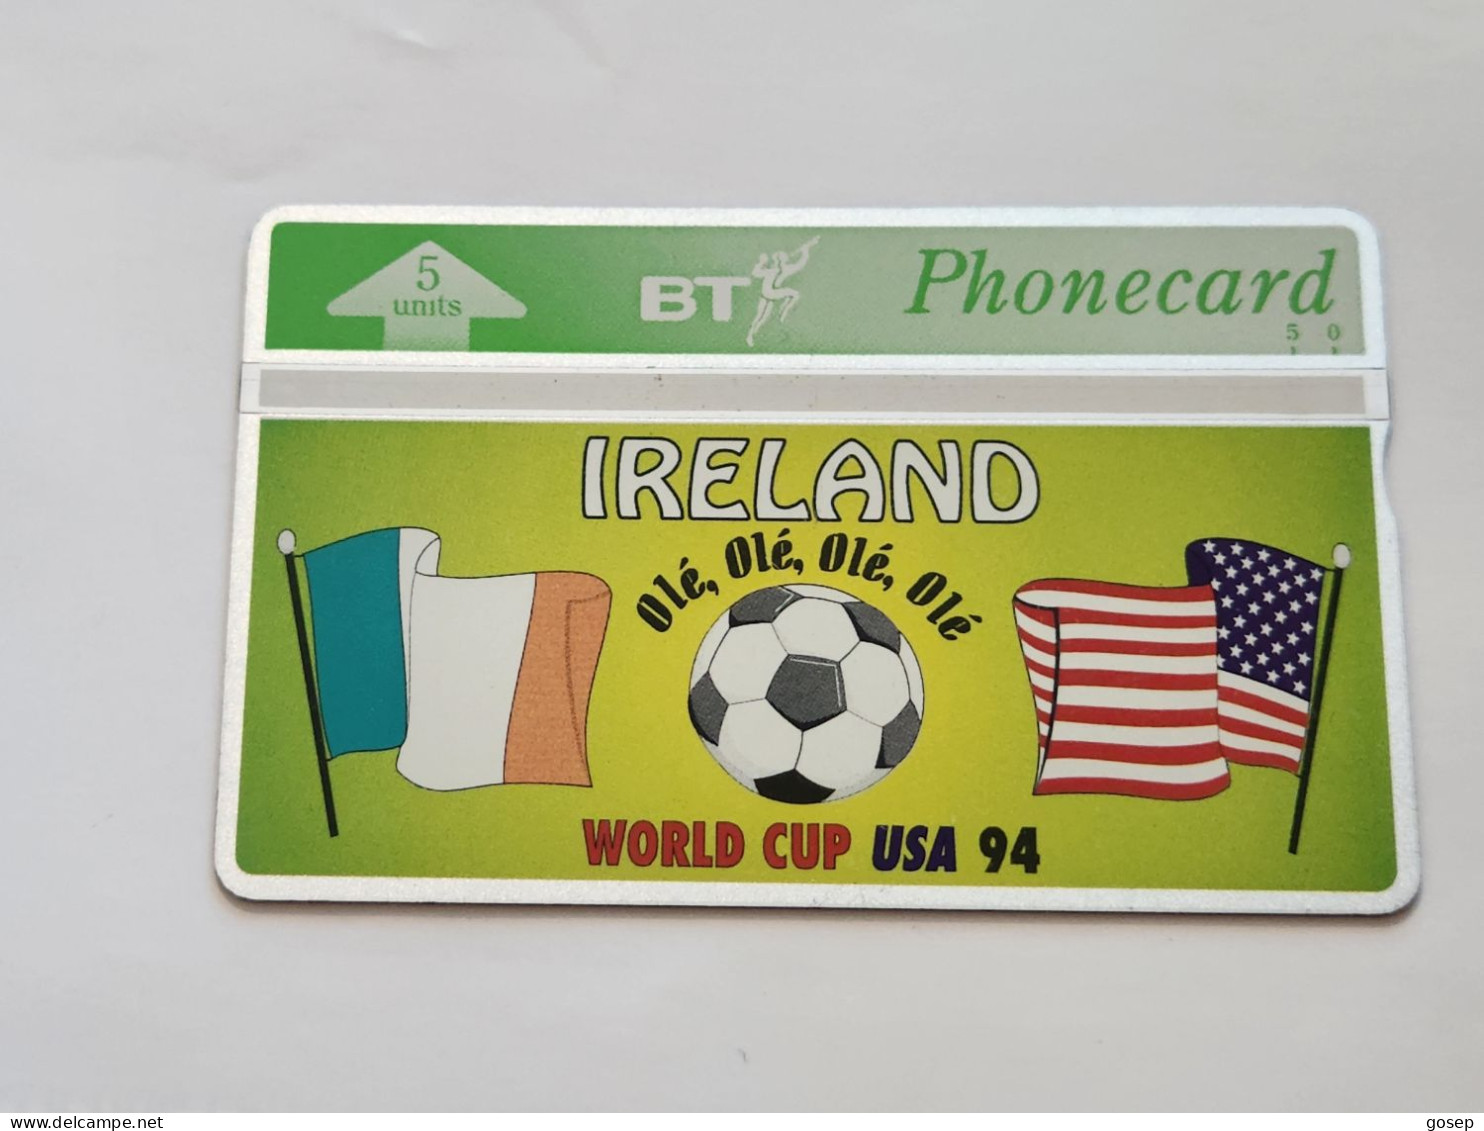 United Kingdom-(BTG-272)-Ireland World Cup-USA-1994-(261)(5units)(403D58107)(tirage-5.000)-price Cataloge-6.00£-mint - BT General Issues